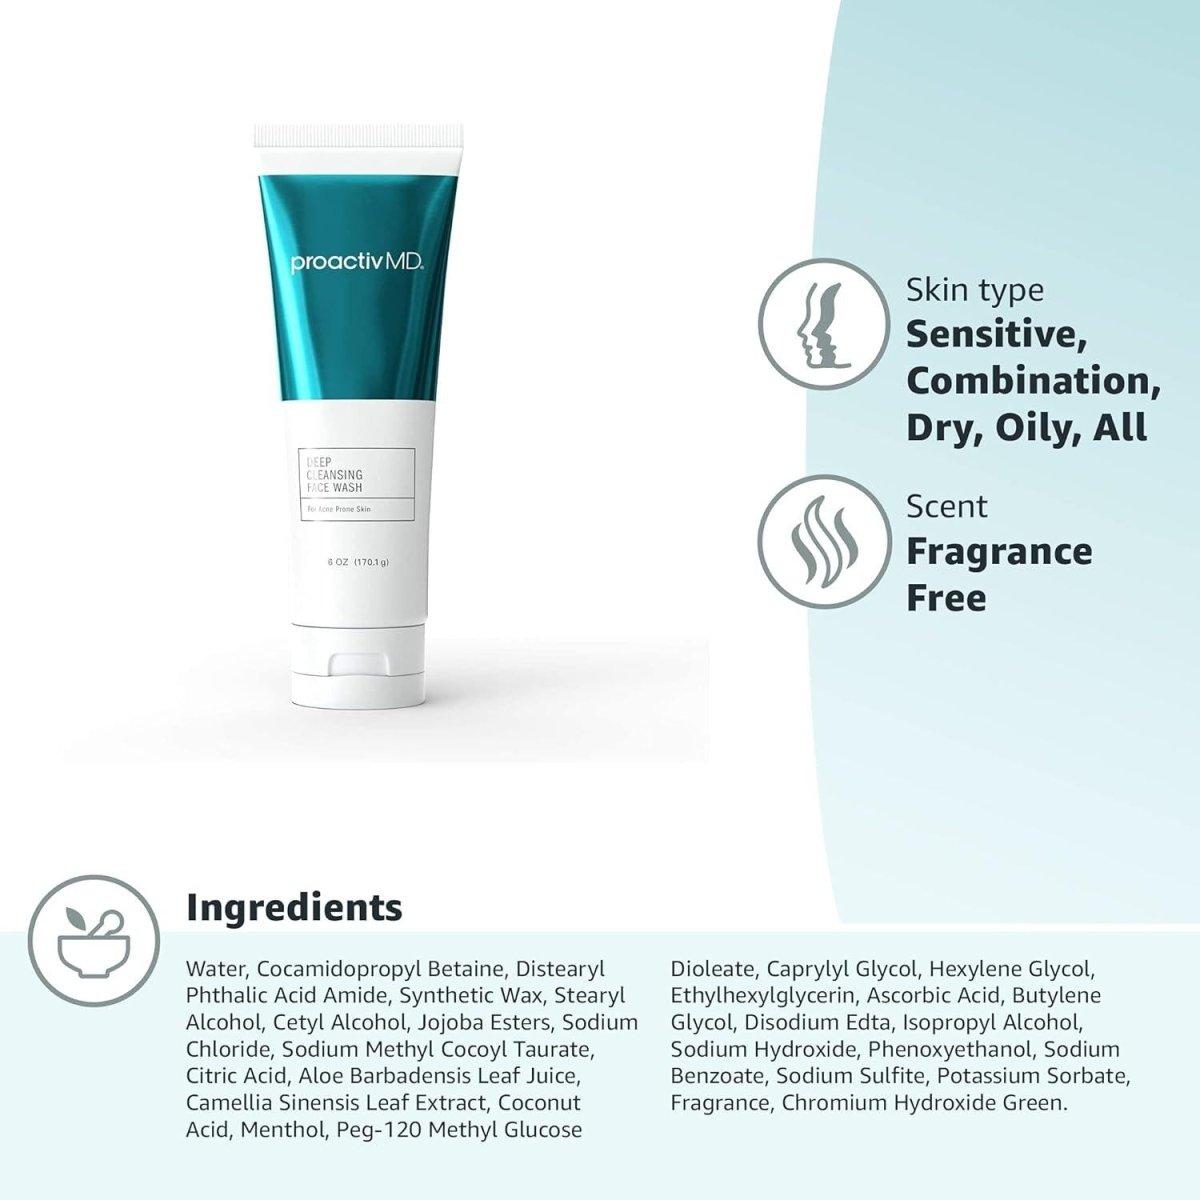 Proactiv md Exfoliating Face Wash - Sensitive Skin - 180ml - Glam Global UK